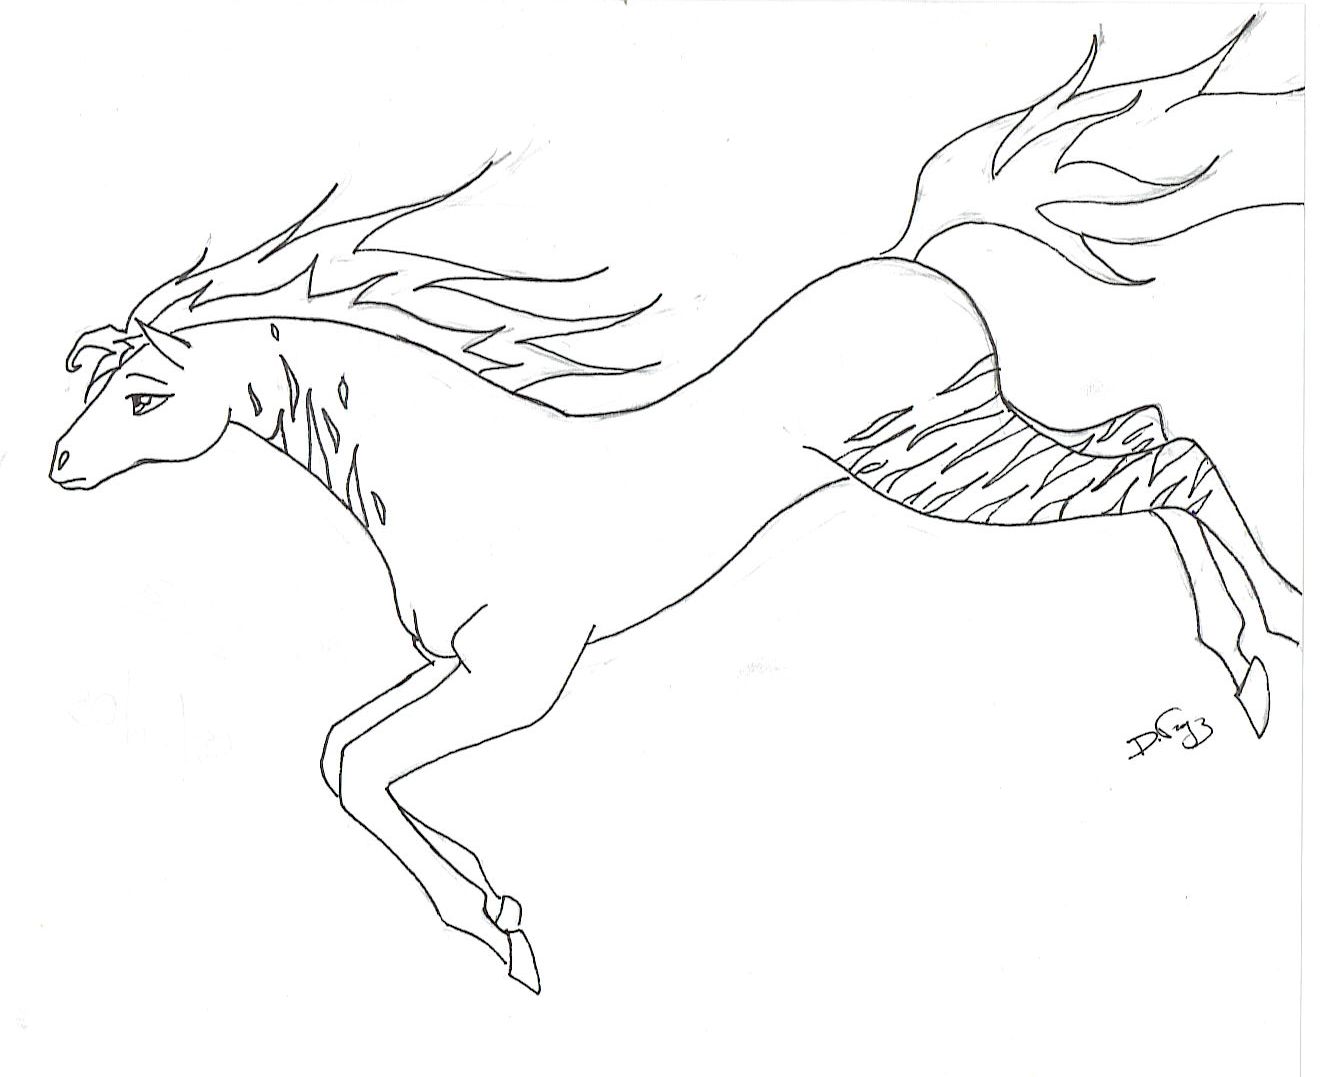 My Horse Form by Bladerunner